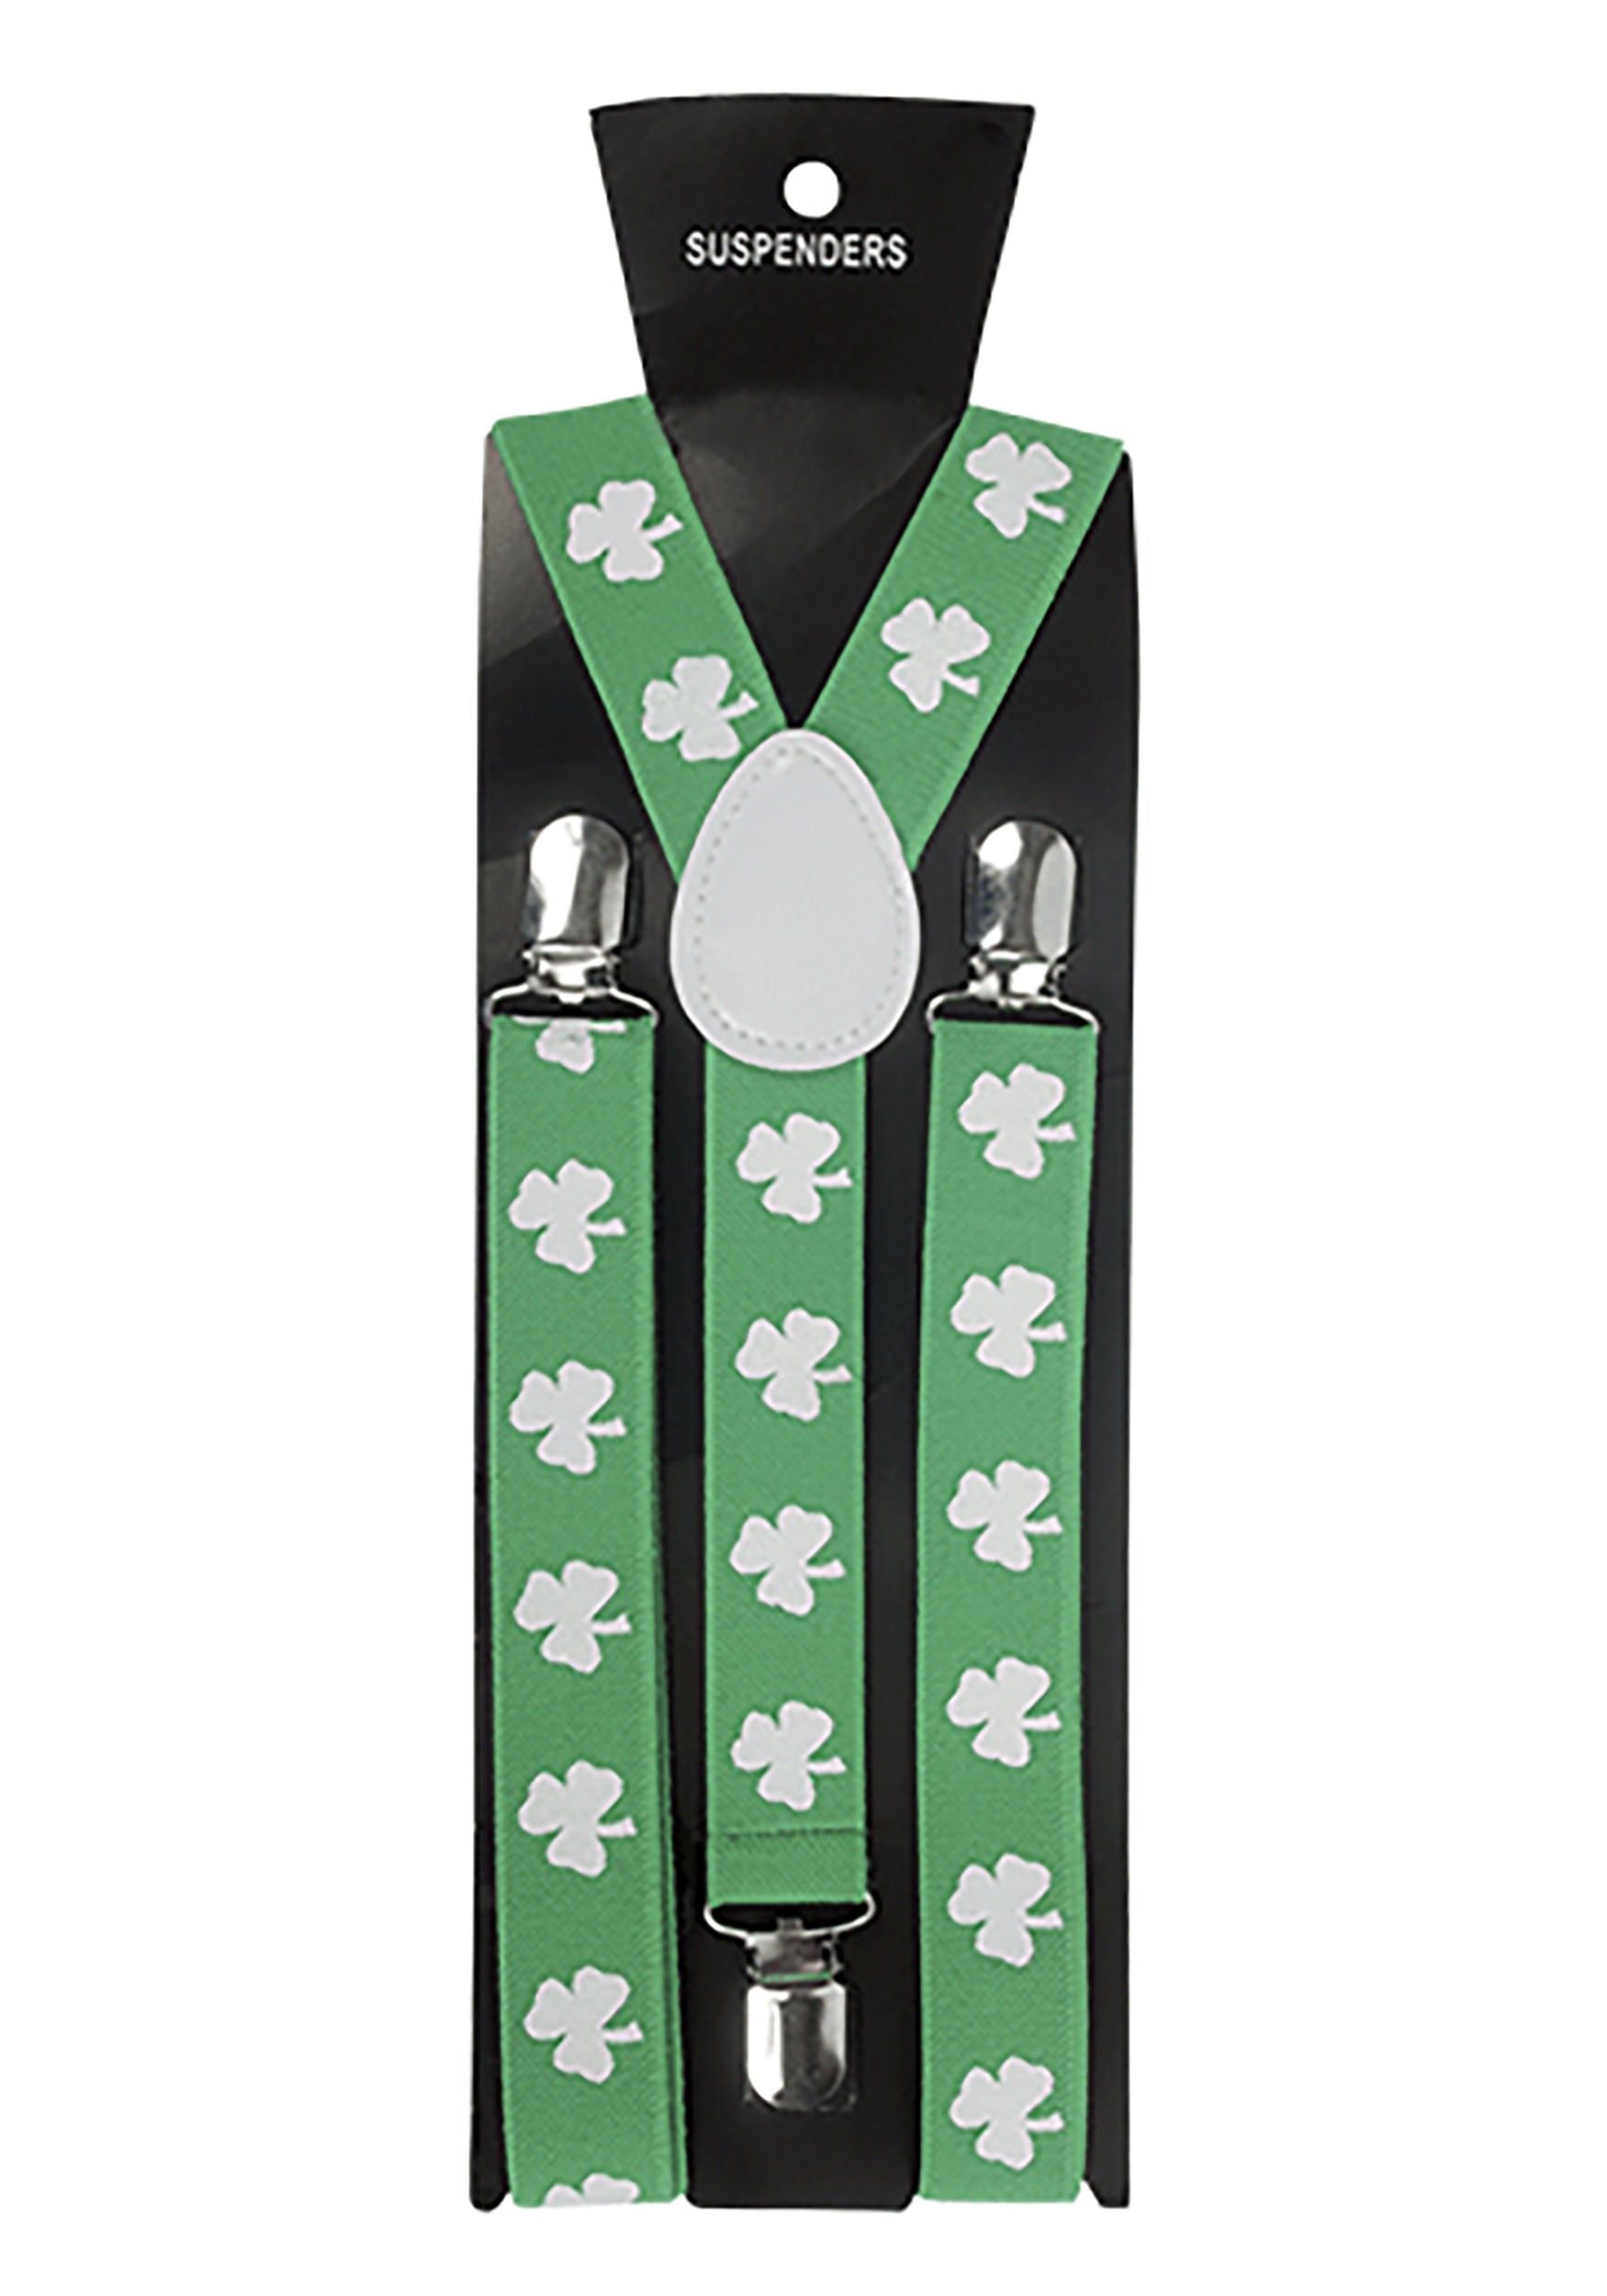 St. Patricks Day Suspender Accessory